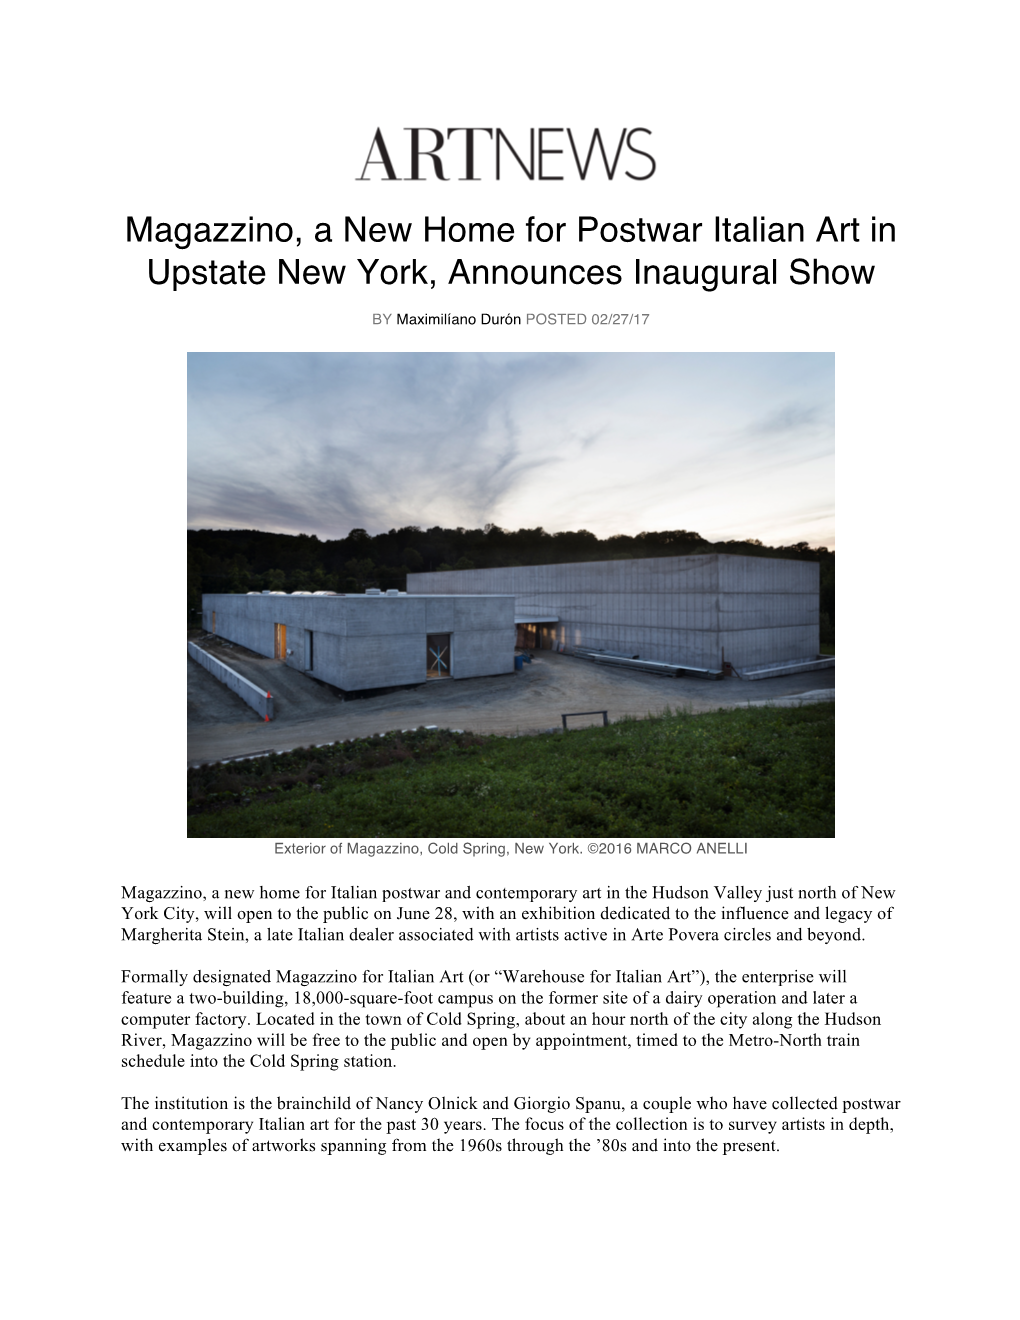 Magazzino, a New Home for Postwar Italian Art in Upstate New York, Announces Inaugural Show